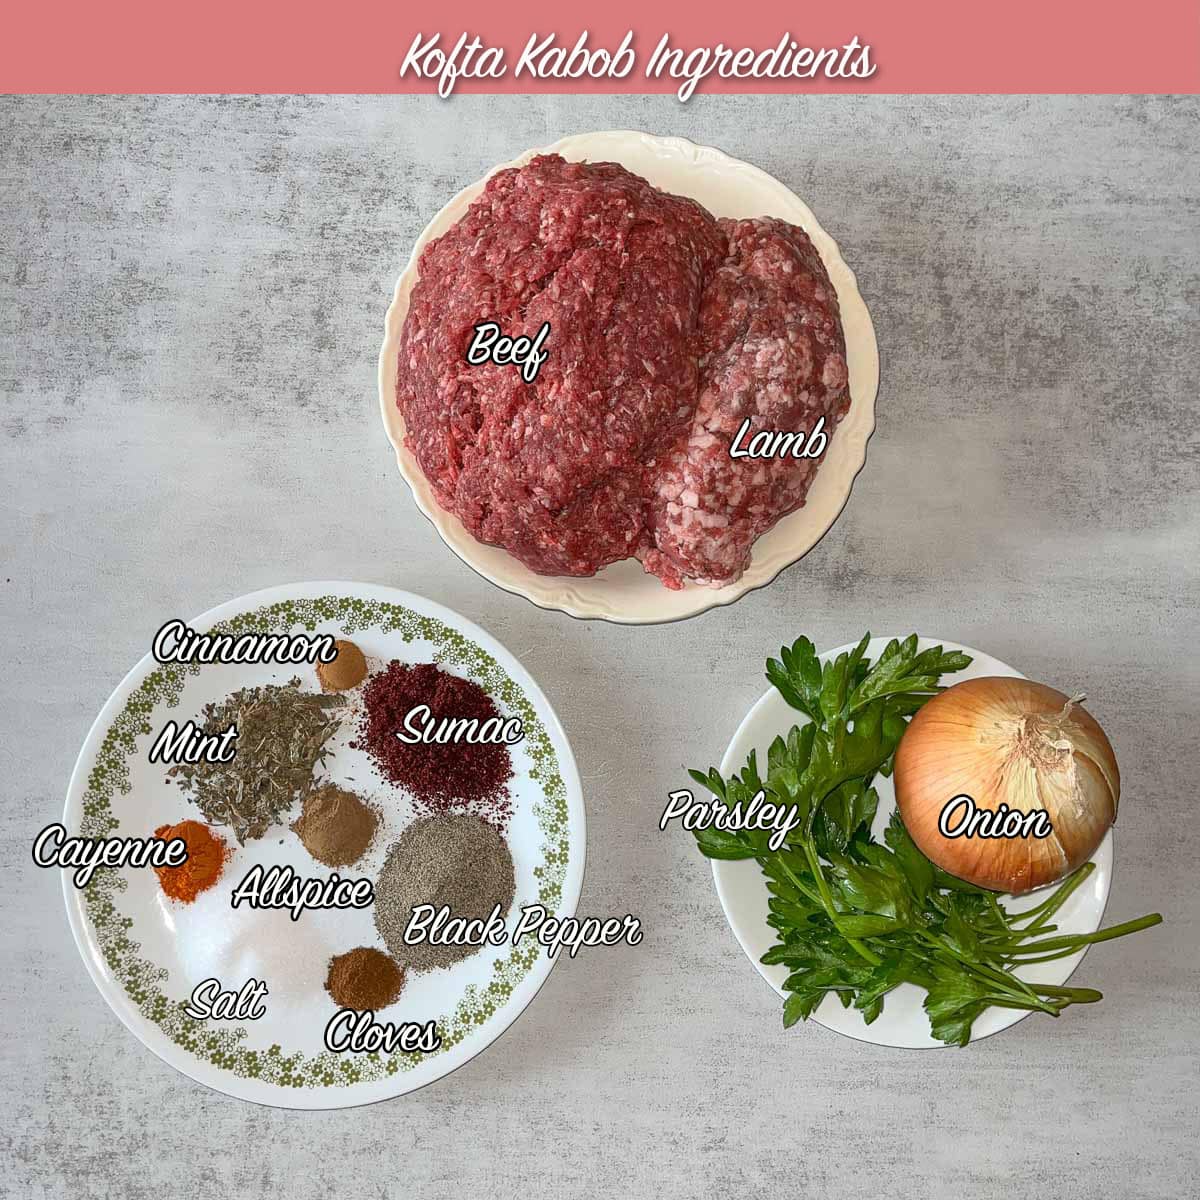 kofta kebab ingredients